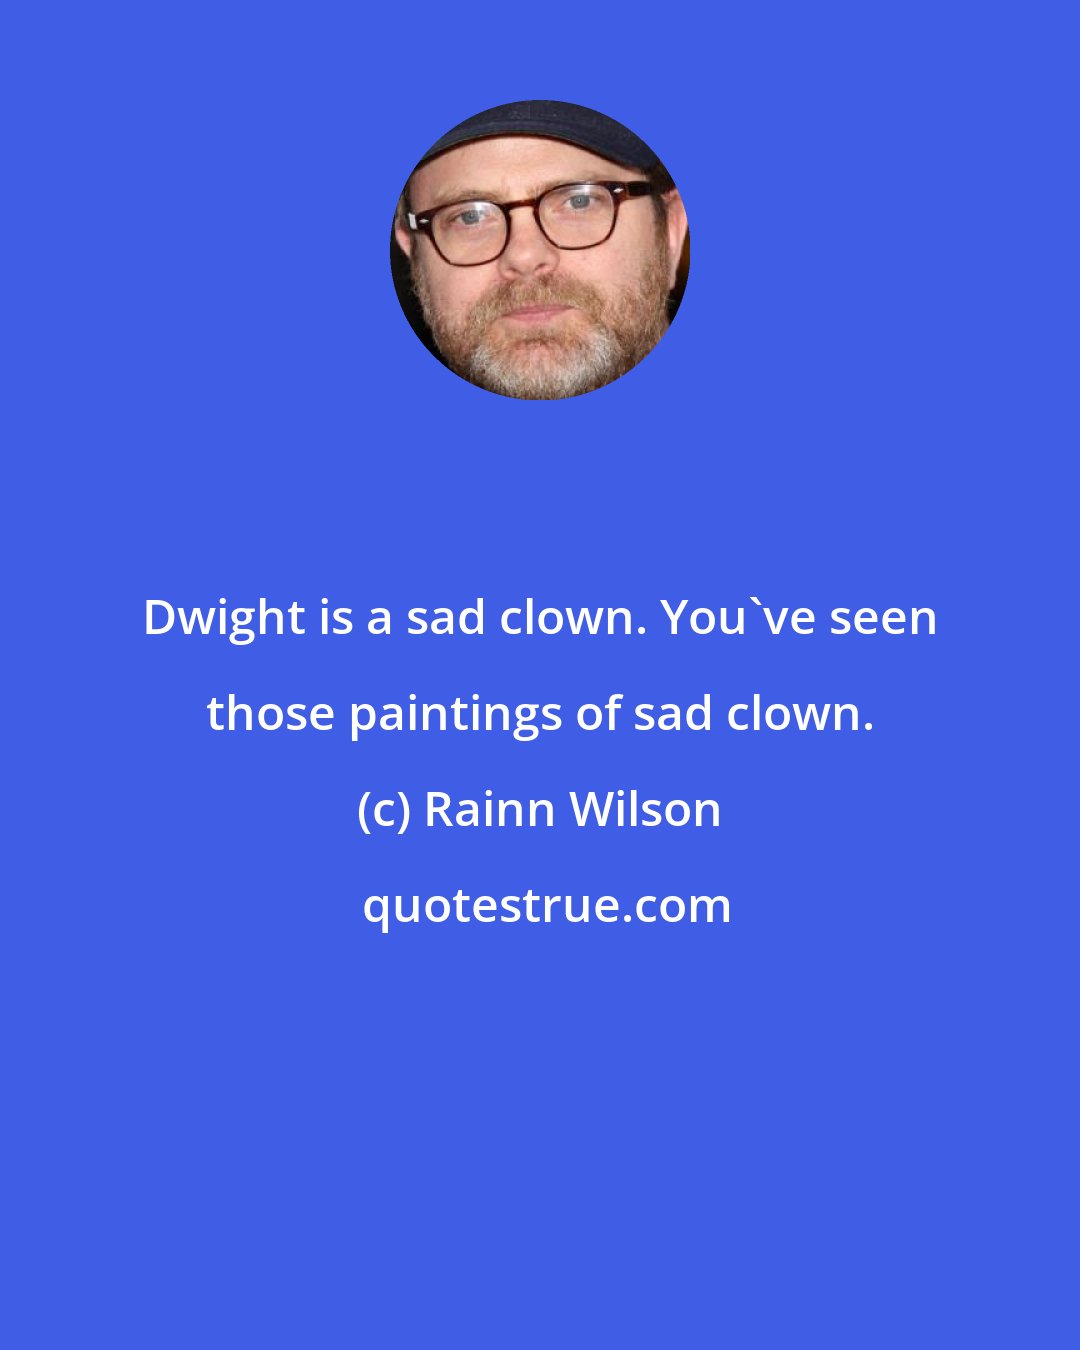 Rainn Wilson: Dwight is a sad clown. You've seen those paintings of sad clown.